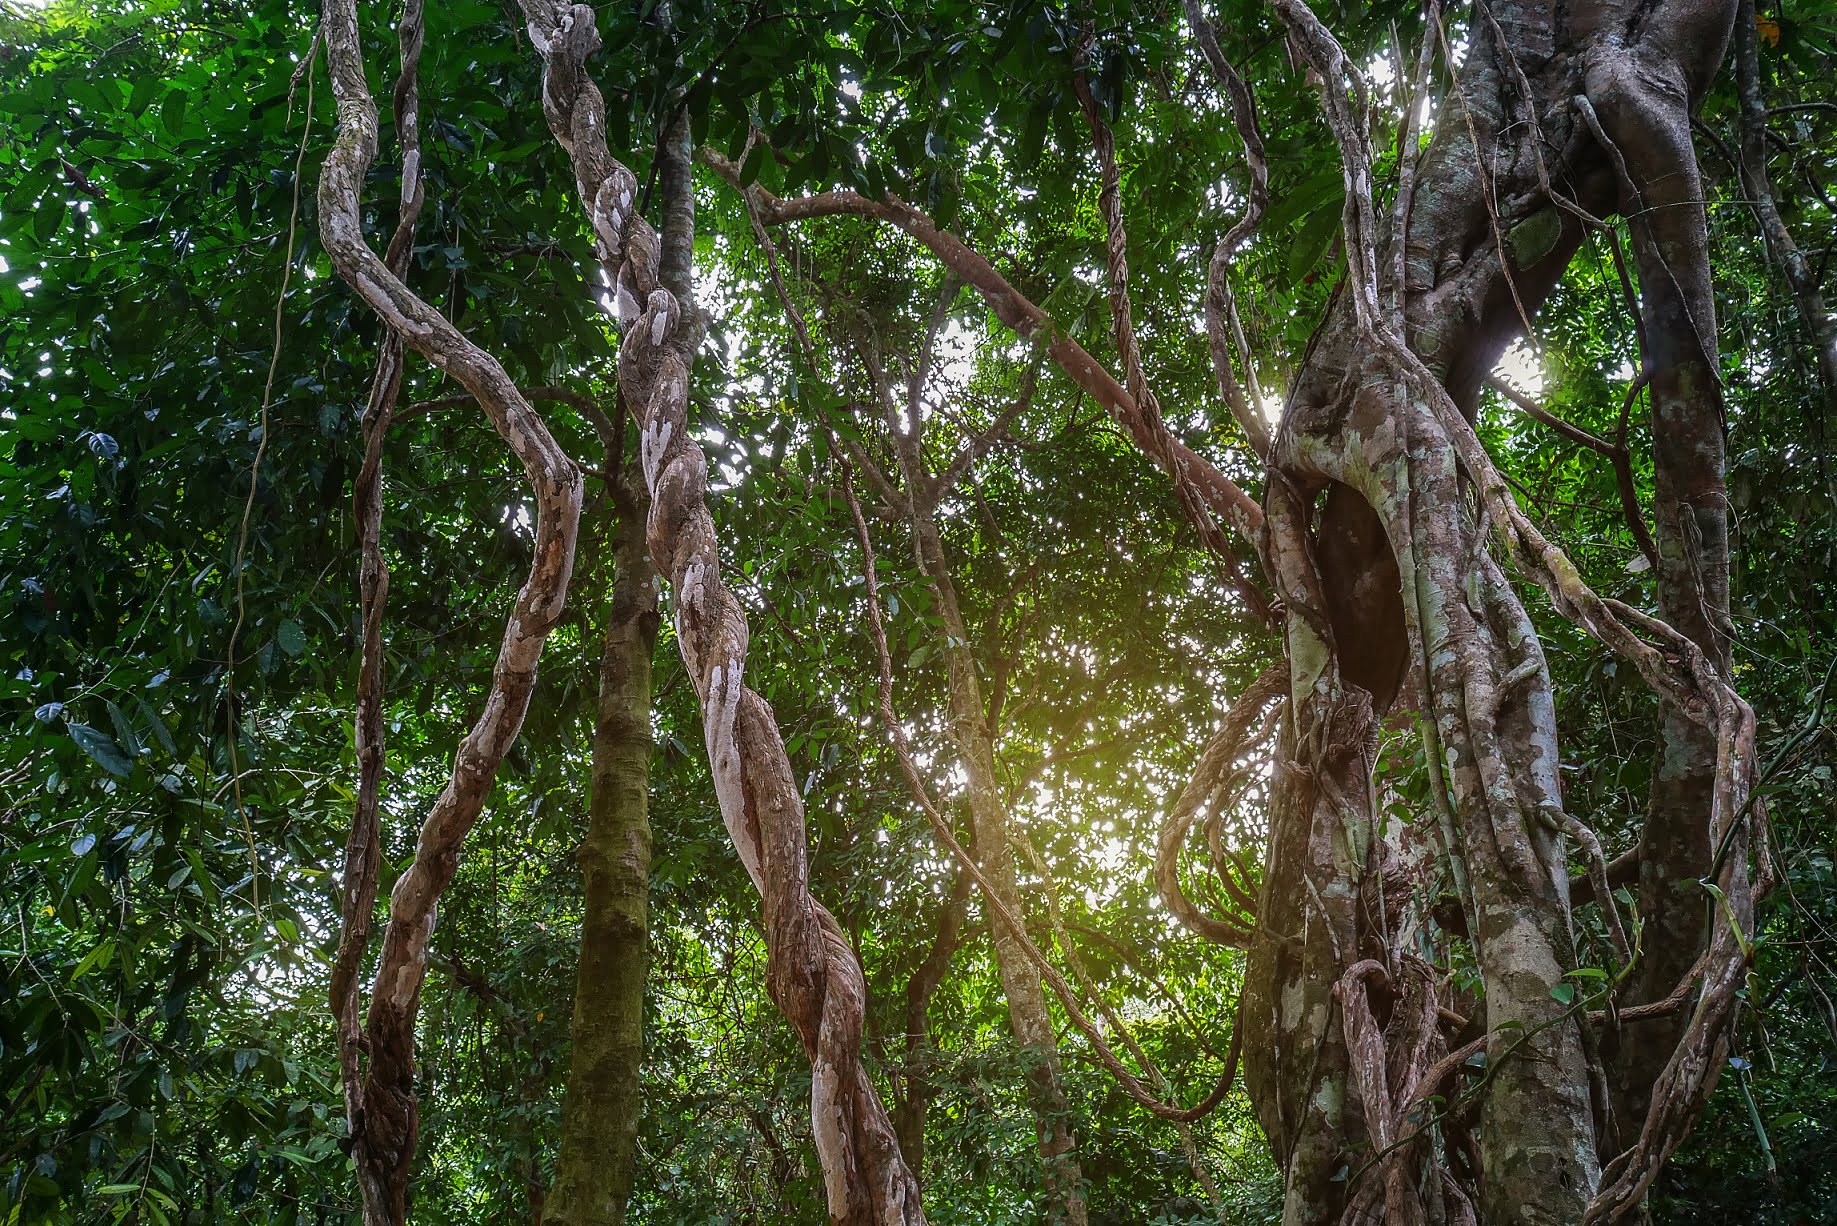 Liana vines in dense tropical rainforest